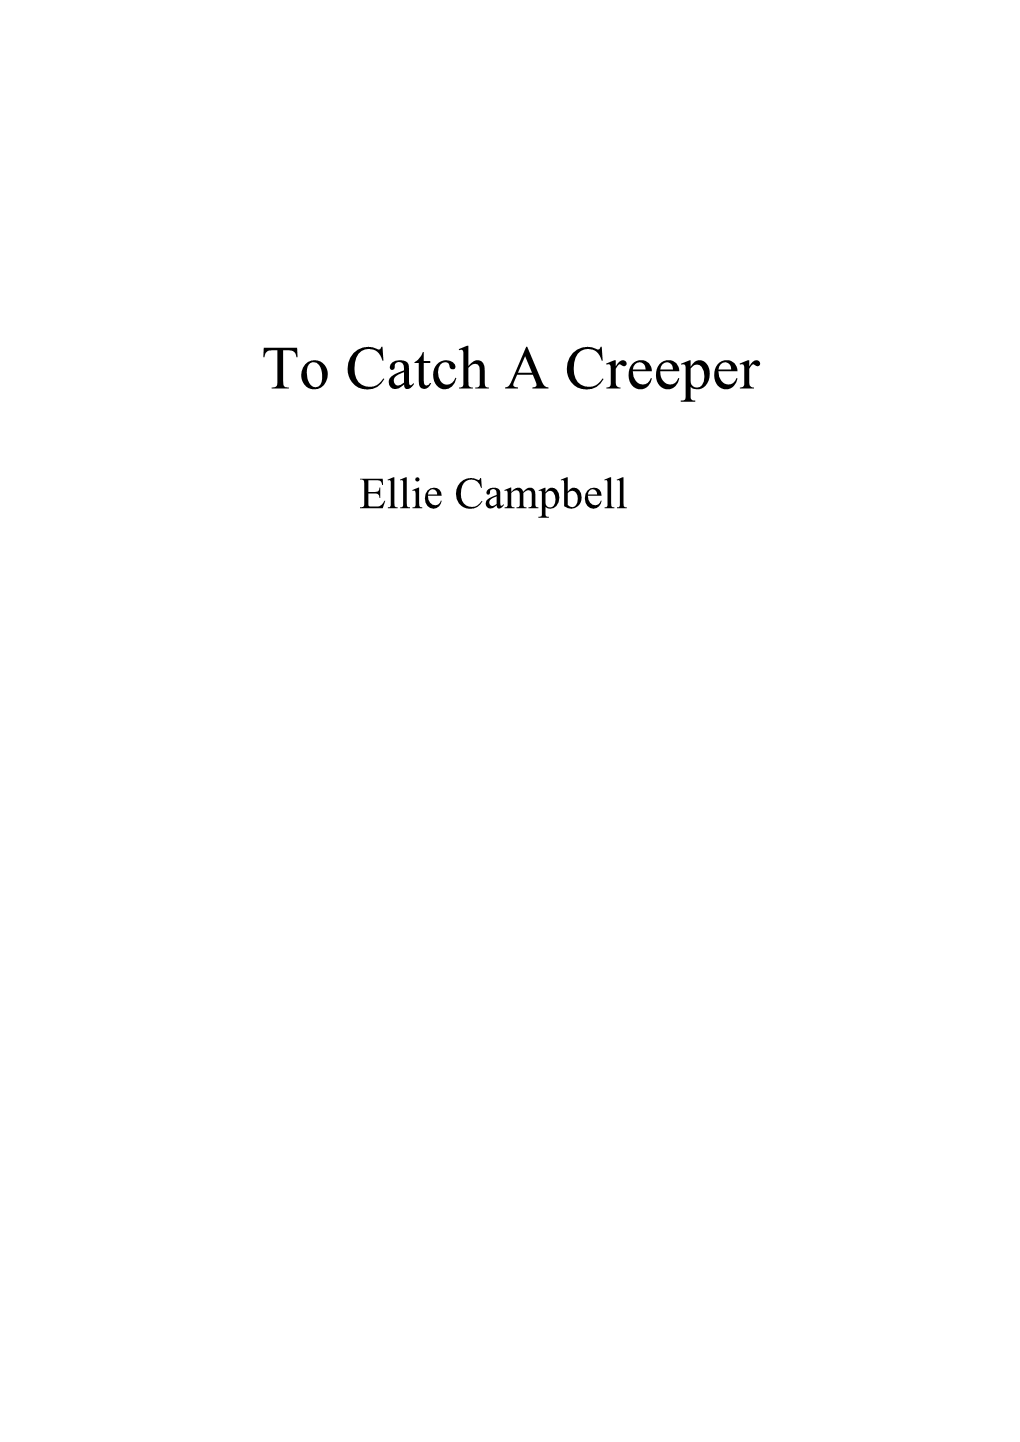 To Catch a Creeper